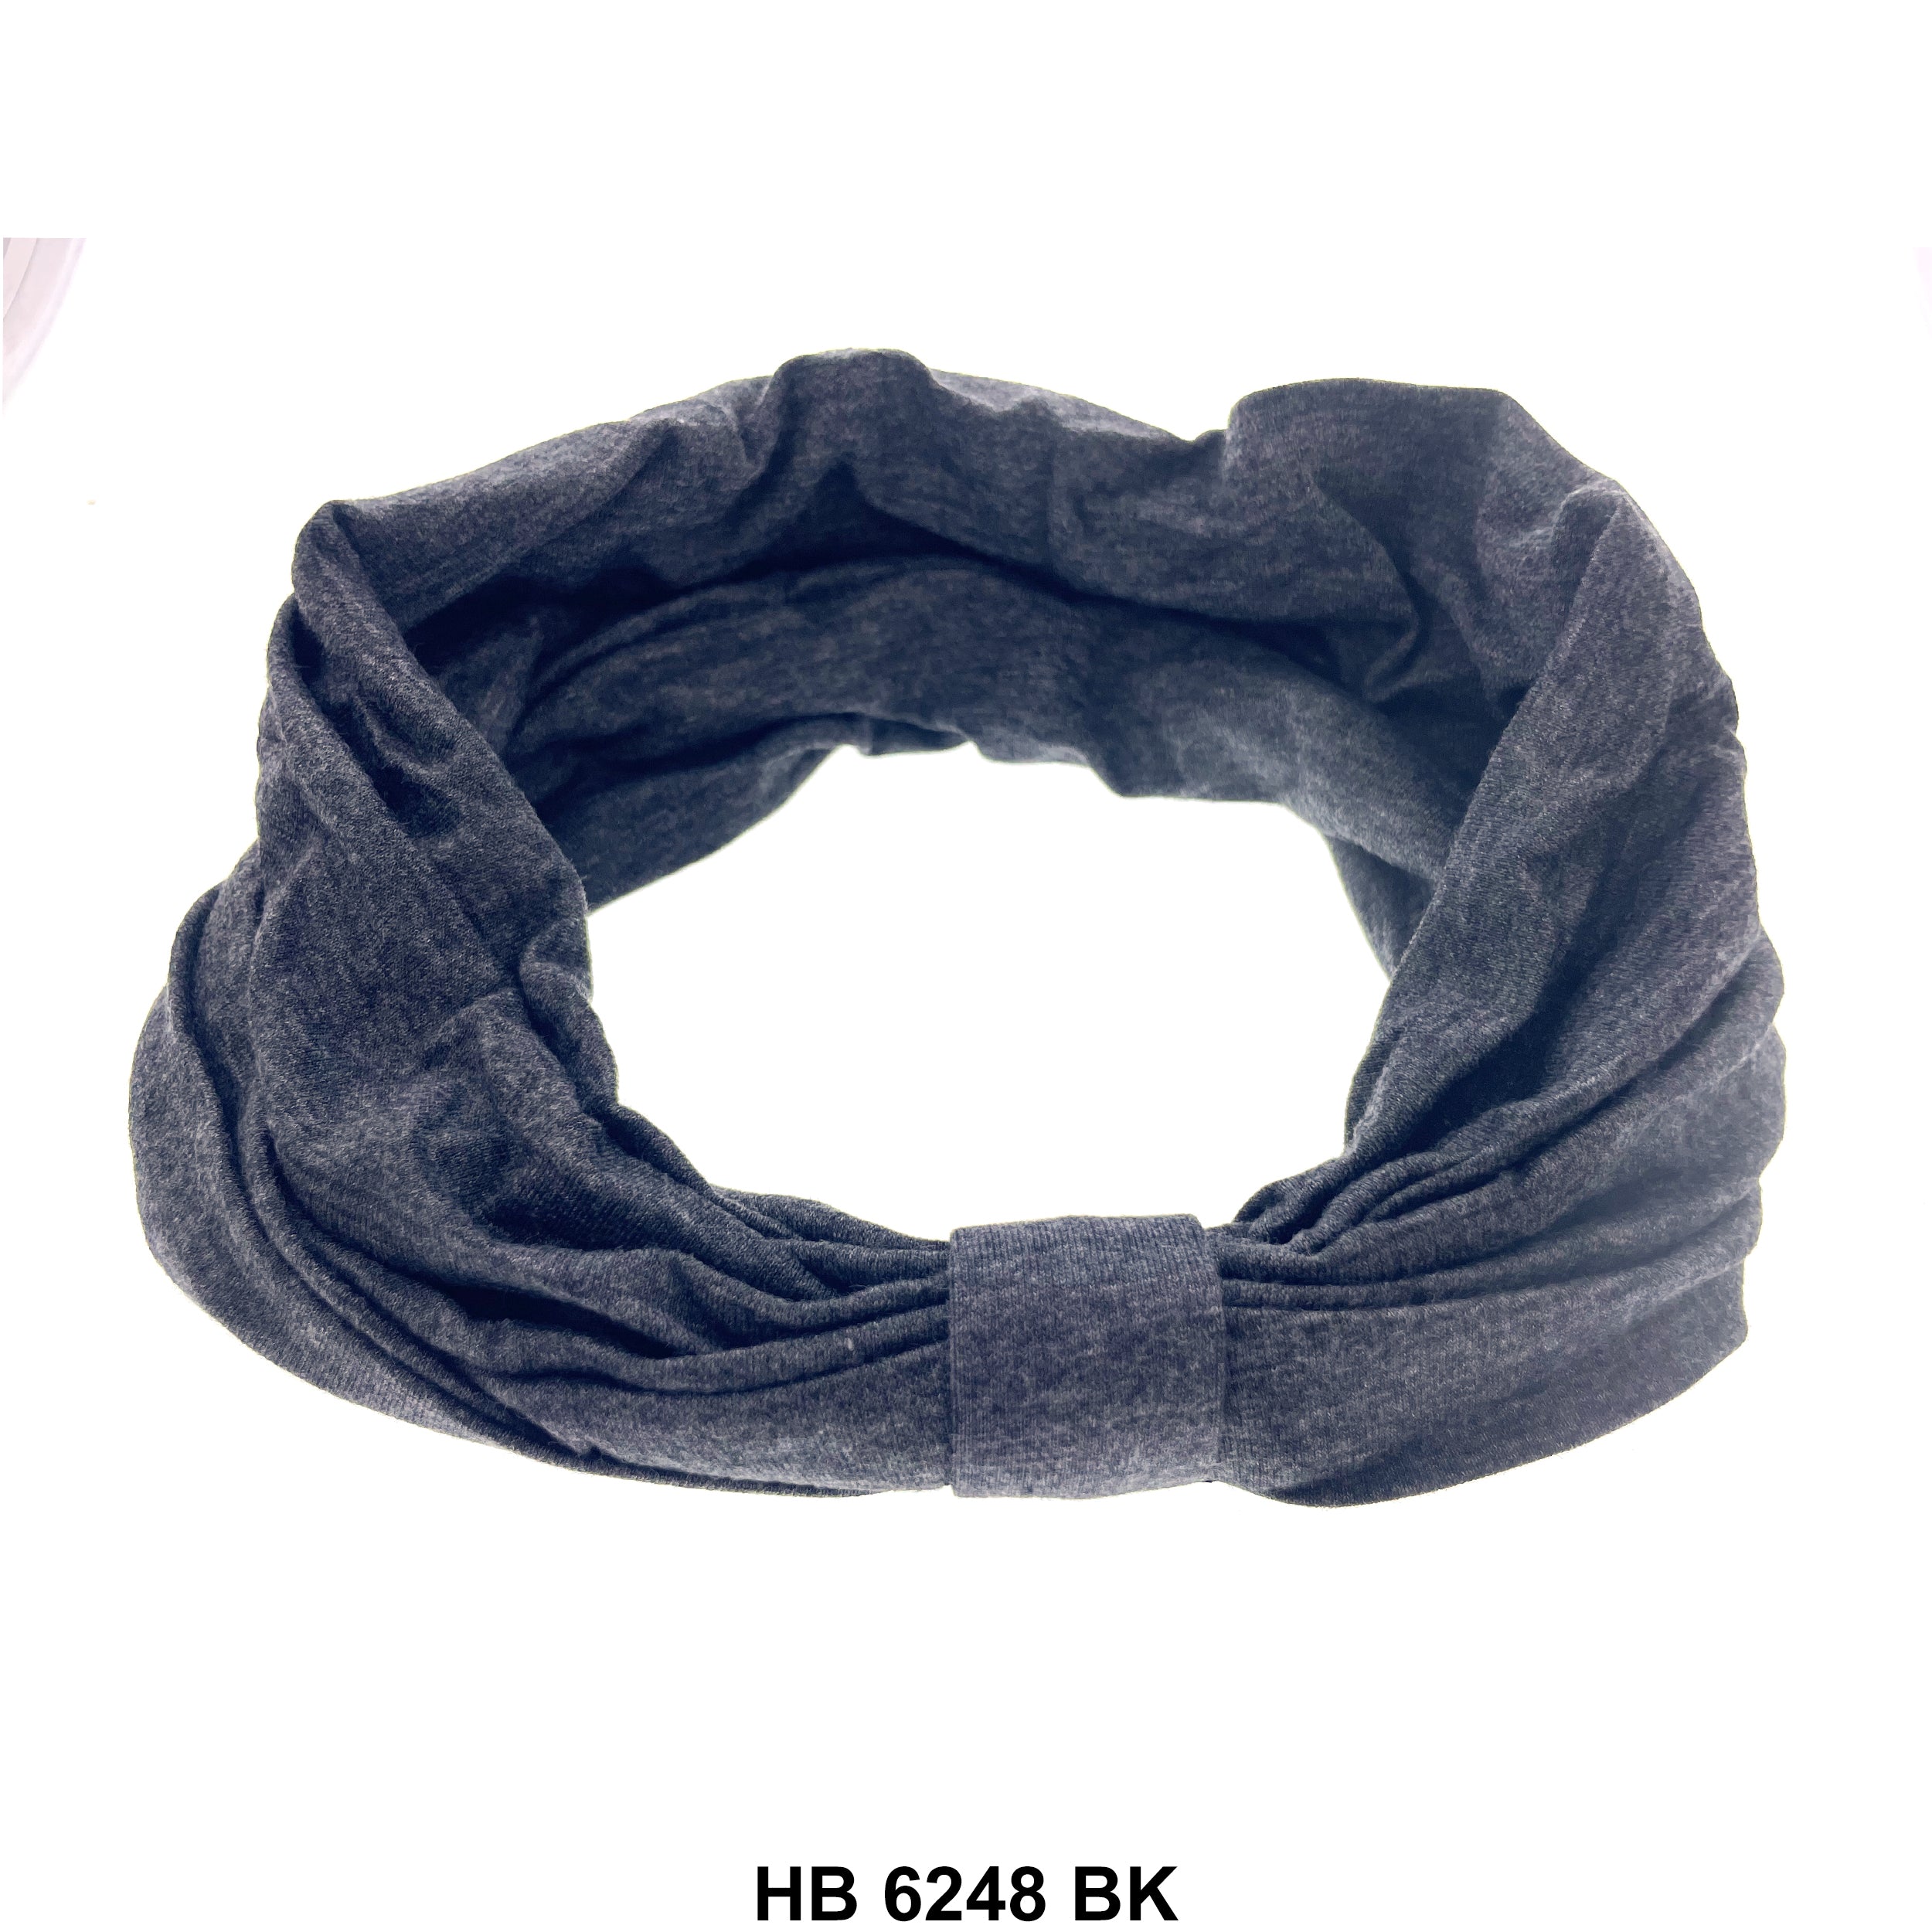 Fashion Headbands HB 6248 BK